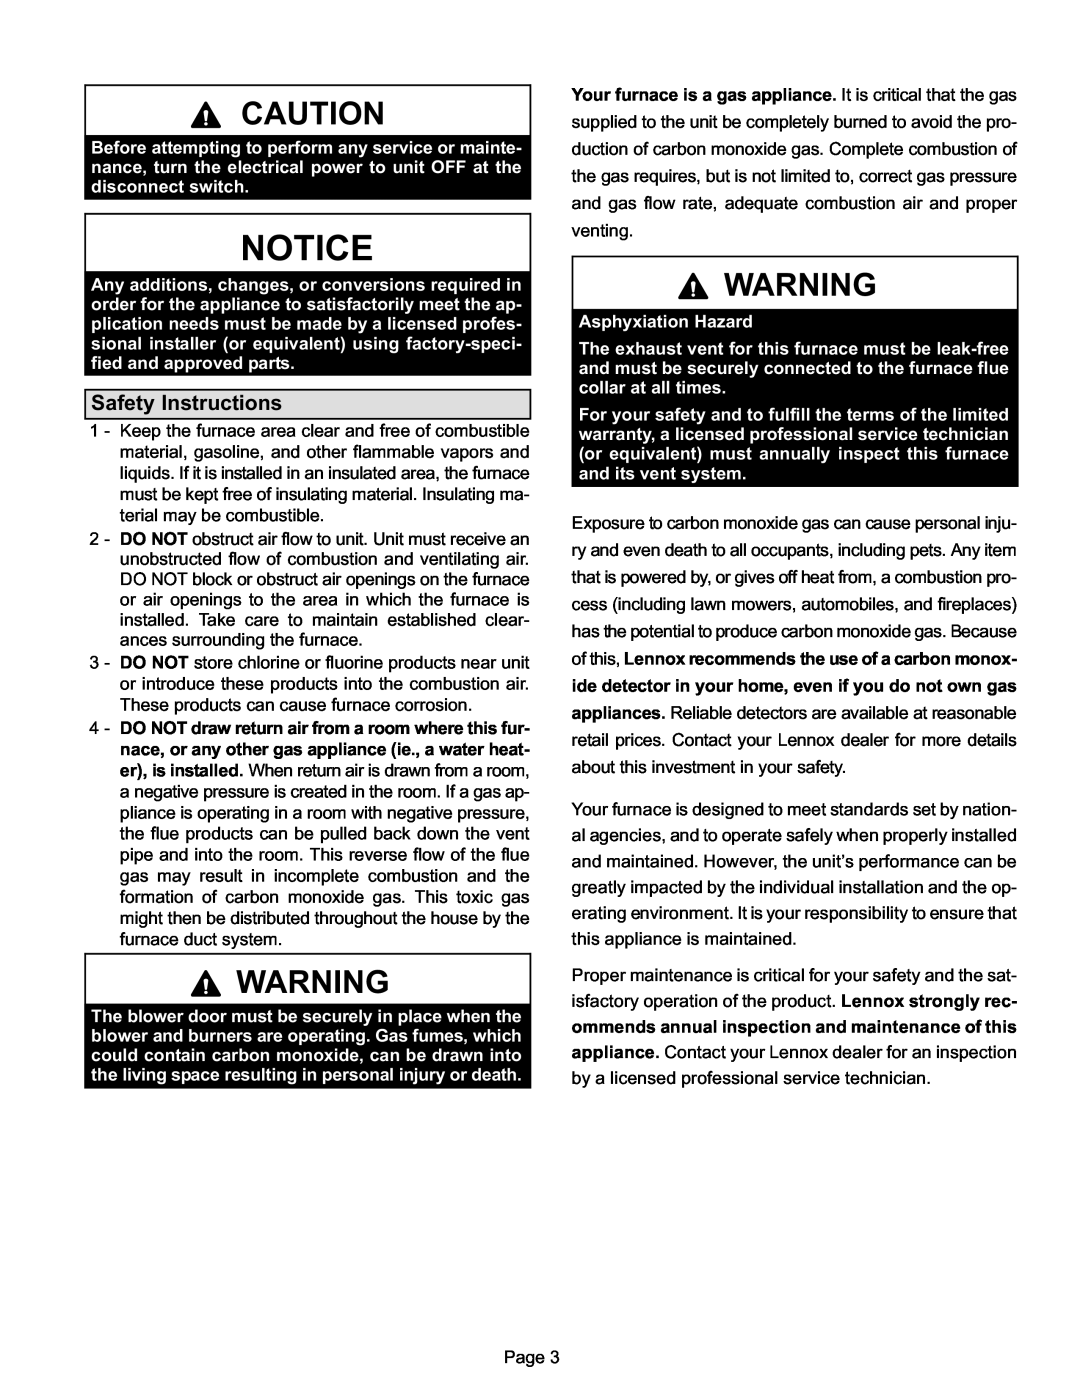 Lennox International Inc EL280UH manual Safety Instructions 